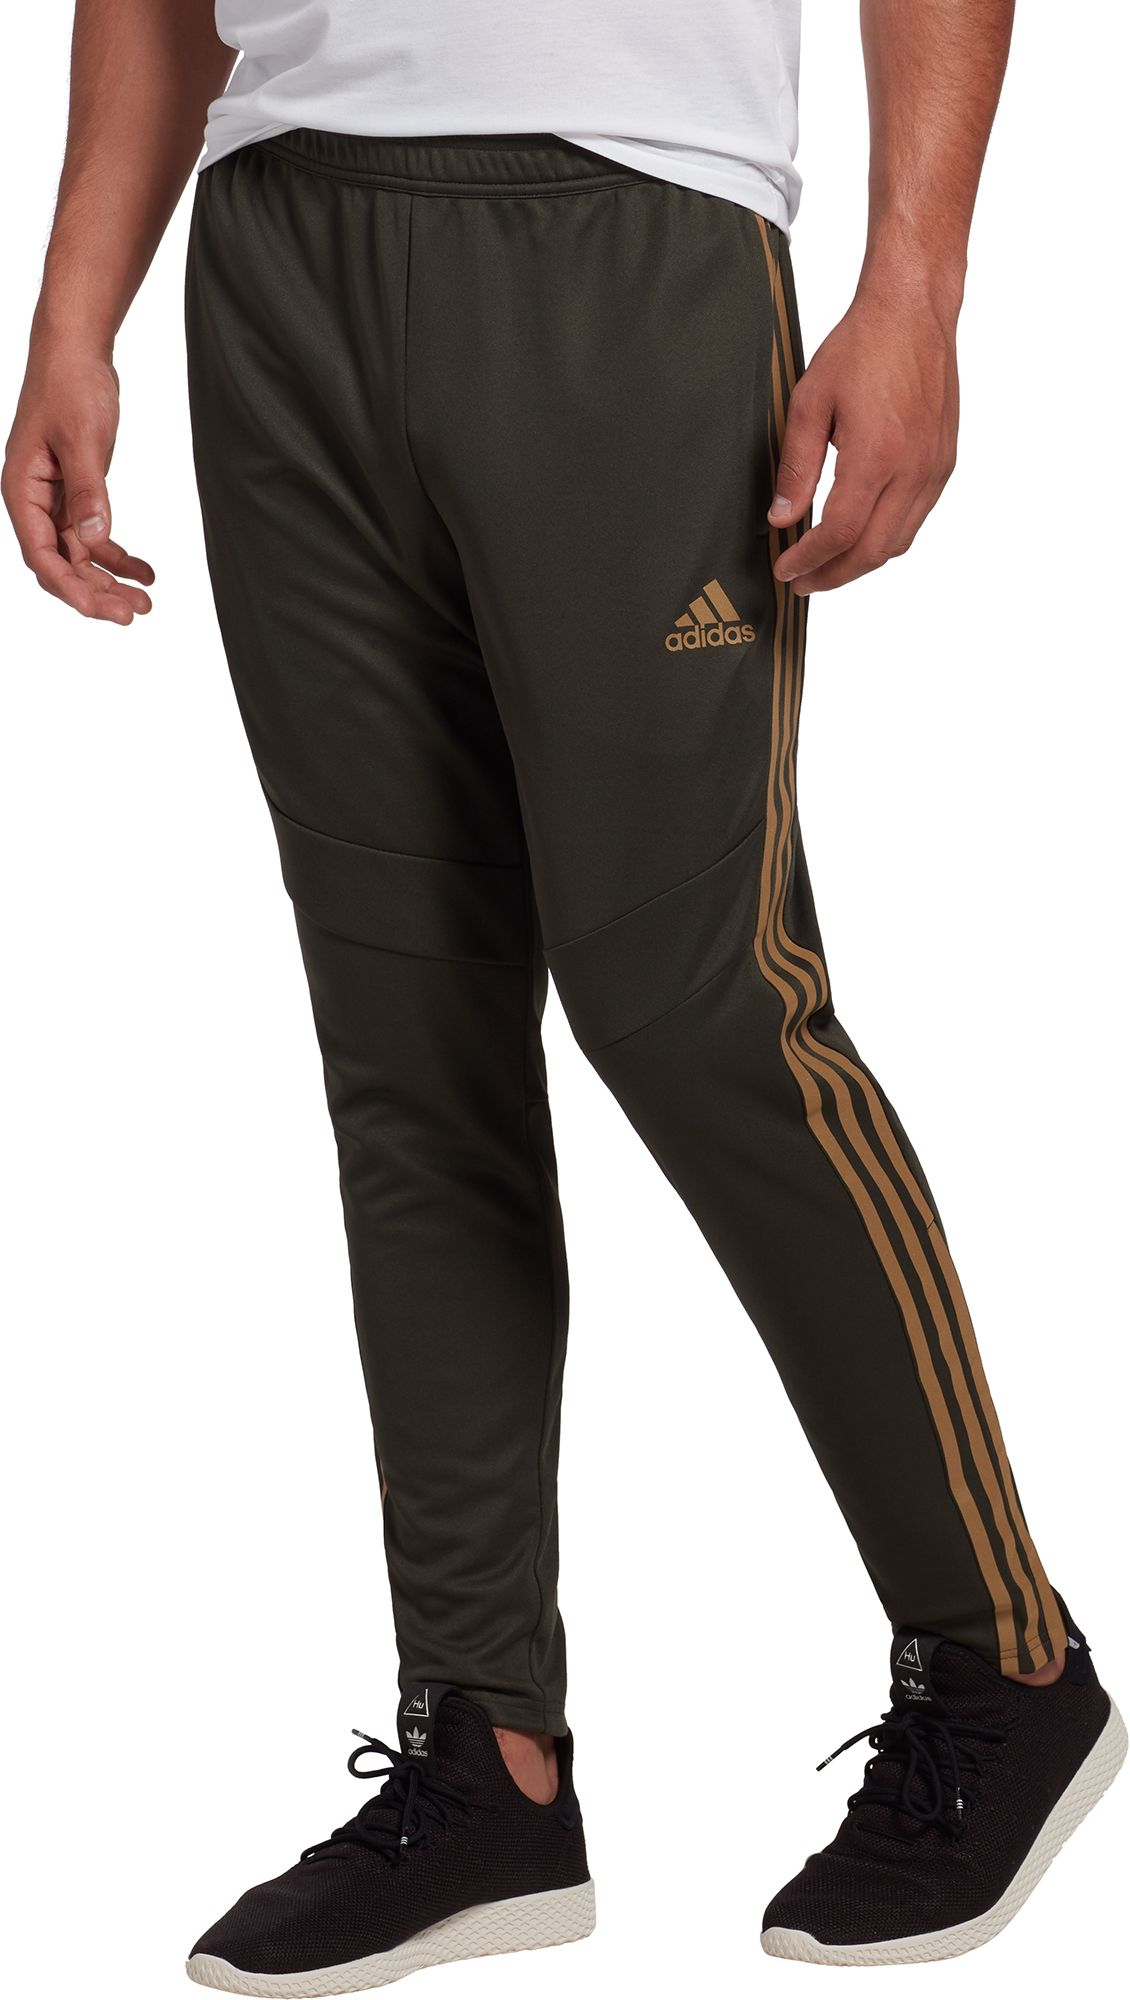 adidas Men's Metallic Tiro 19 Training Pants (Regular and Big & Tall) - .97